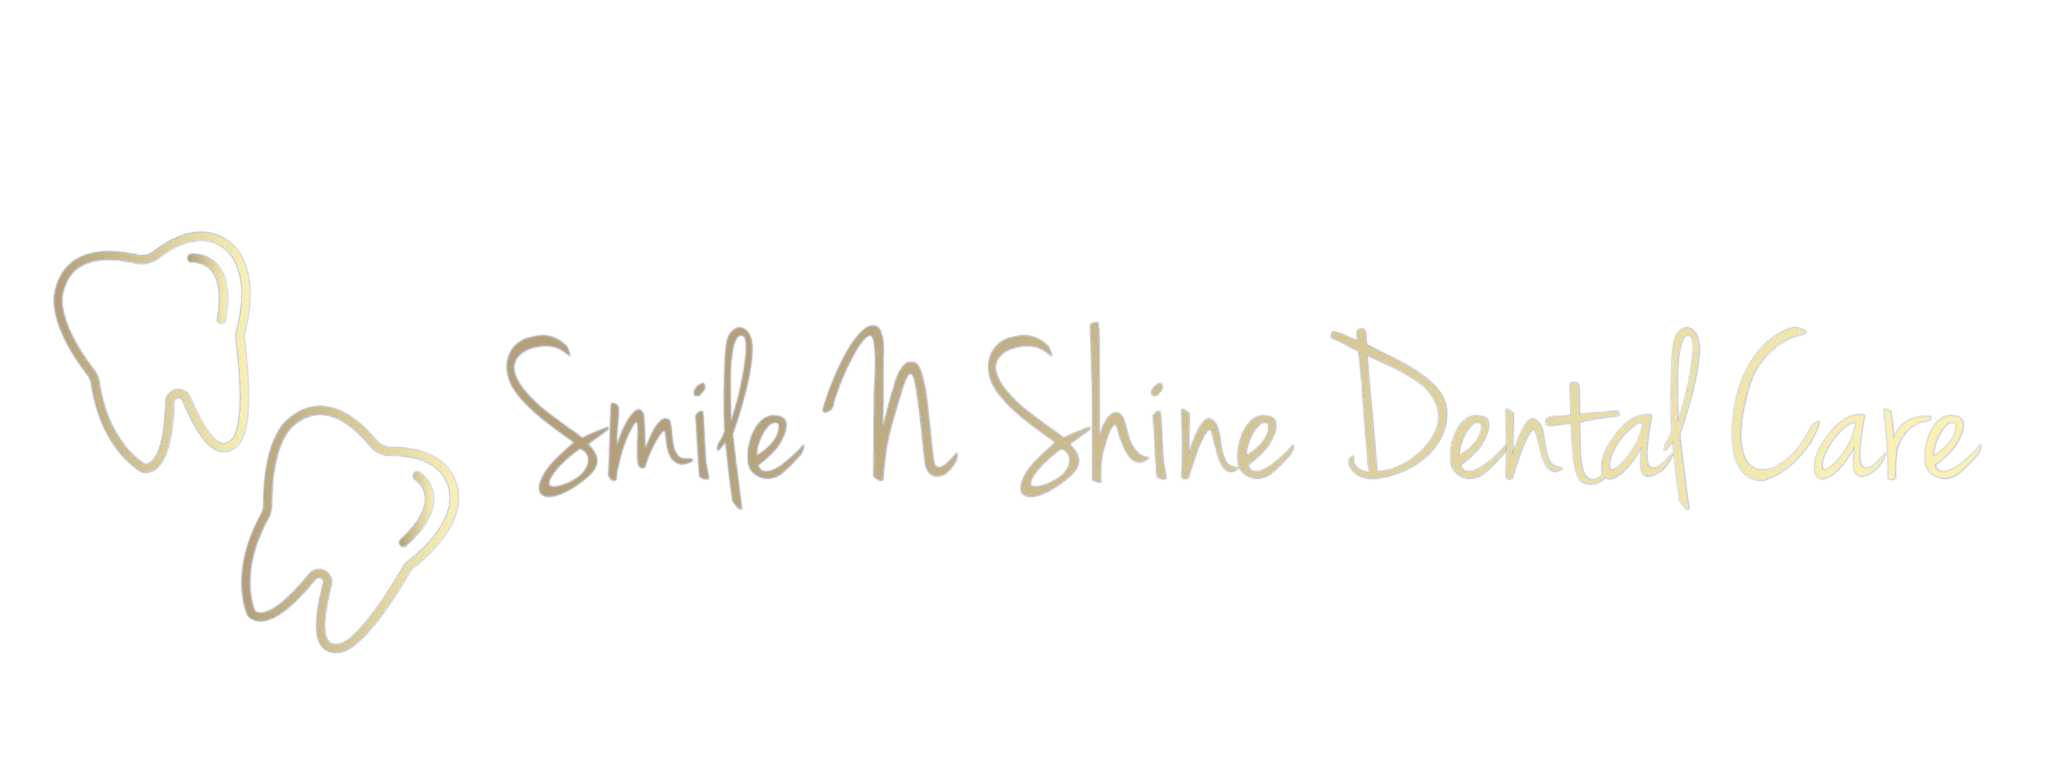 Smile N Shine Dental Care - Best Dentist in Orange Logo